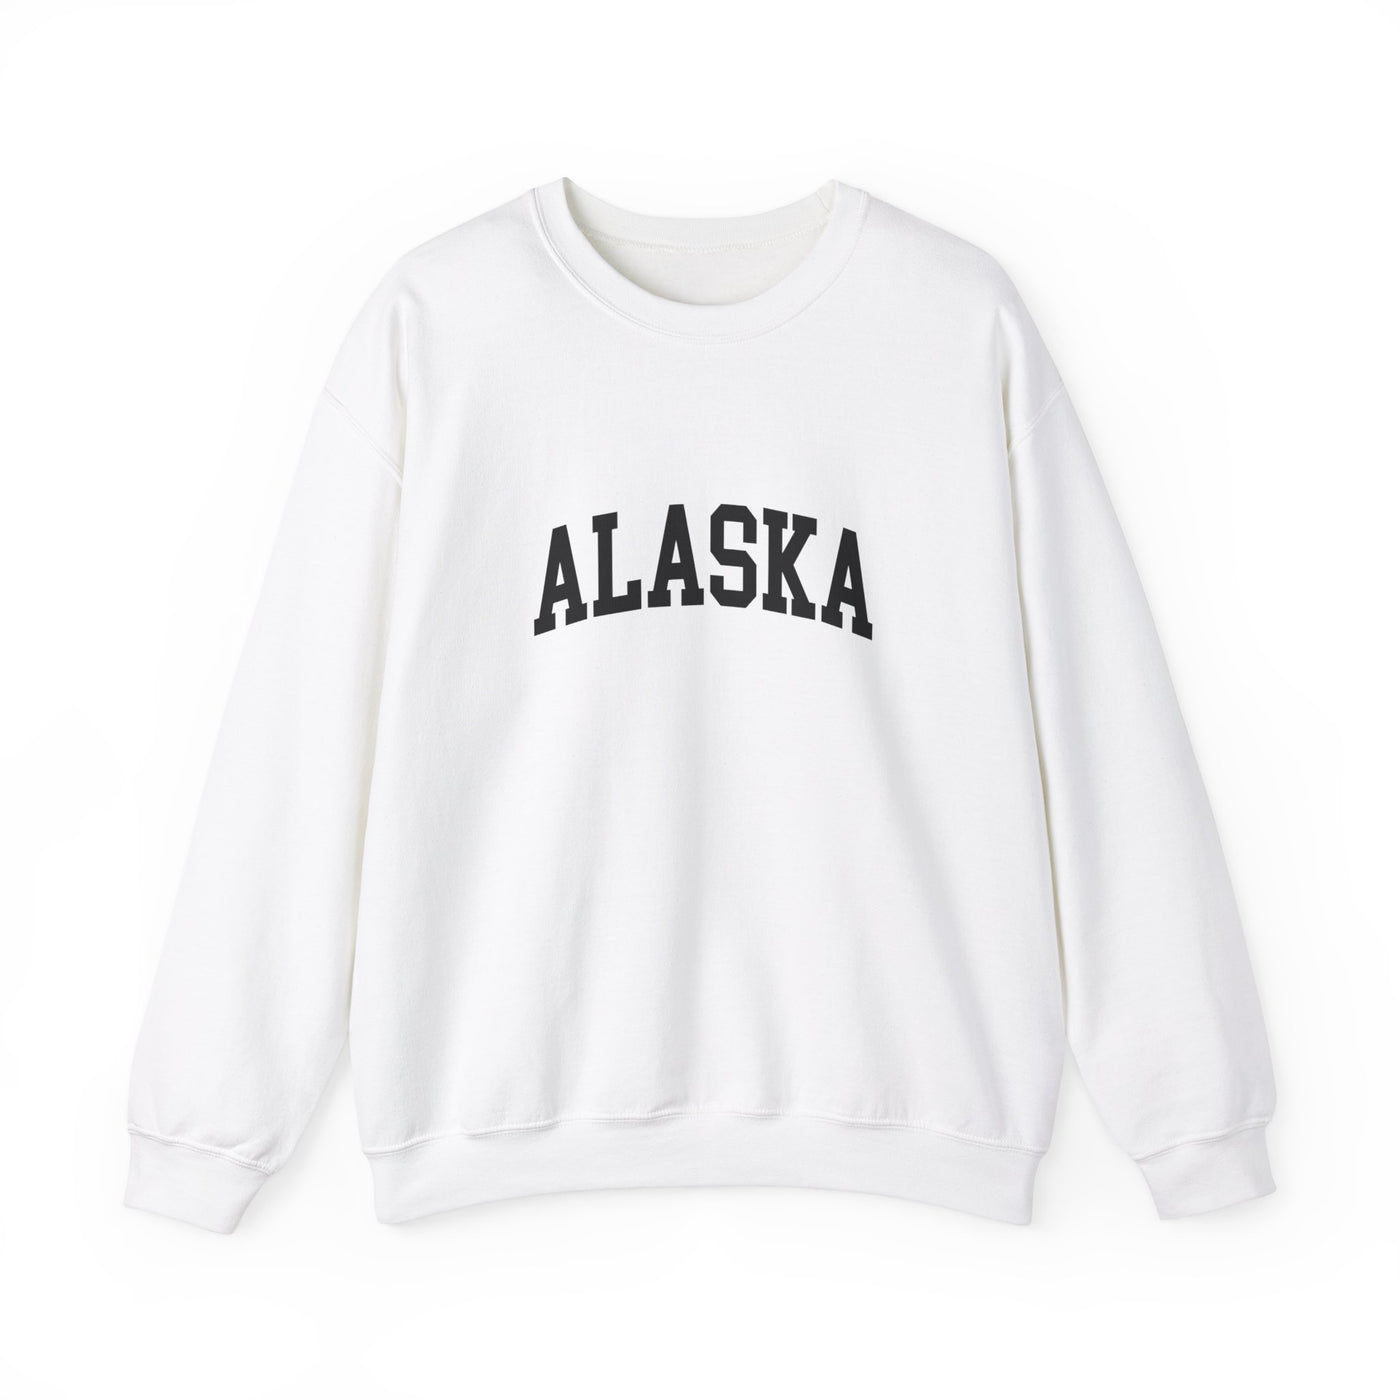 Alaska Collegiate Crewneck Sweatshirt